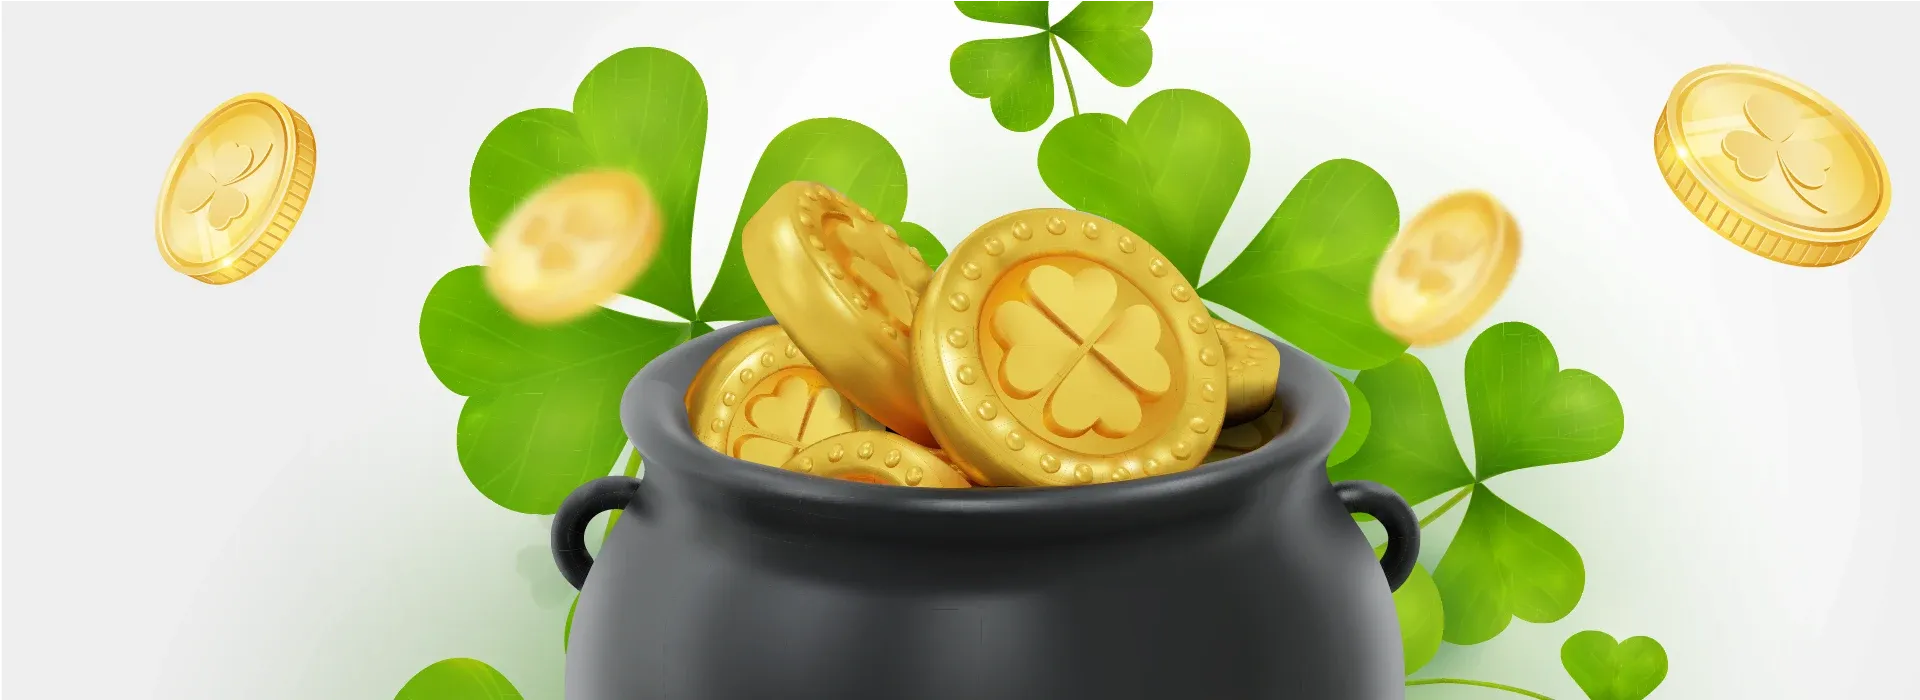 image of a black pot full of golden coins